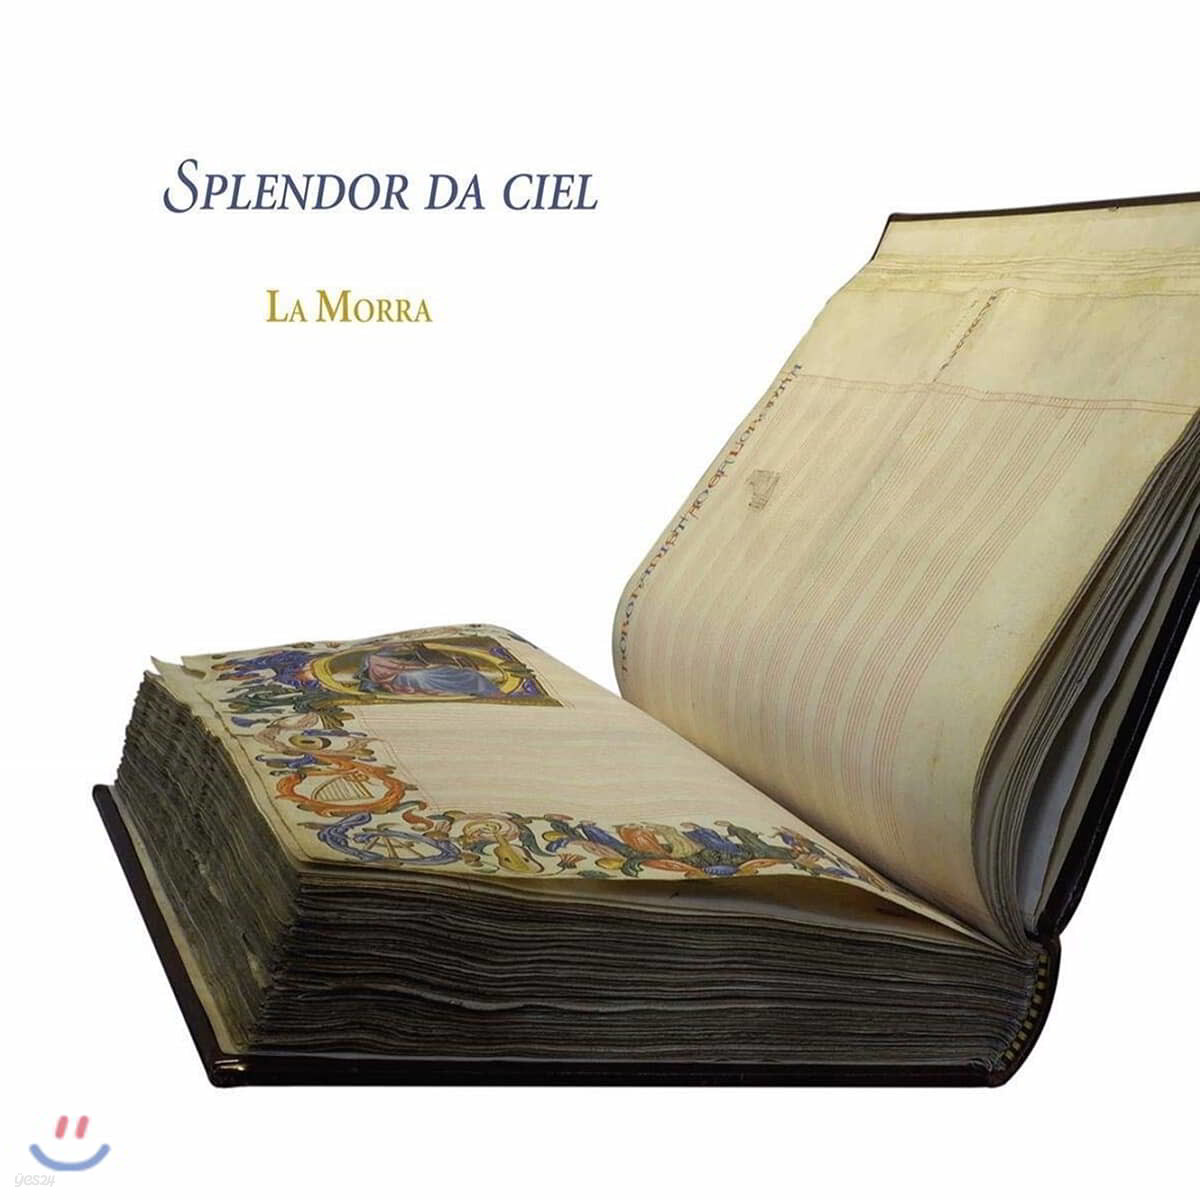 La Morra 천상의 빛 - 14세기 피렌체의 음악 (Splendor da ciel Music from the San Lorenzo Palimpsest)